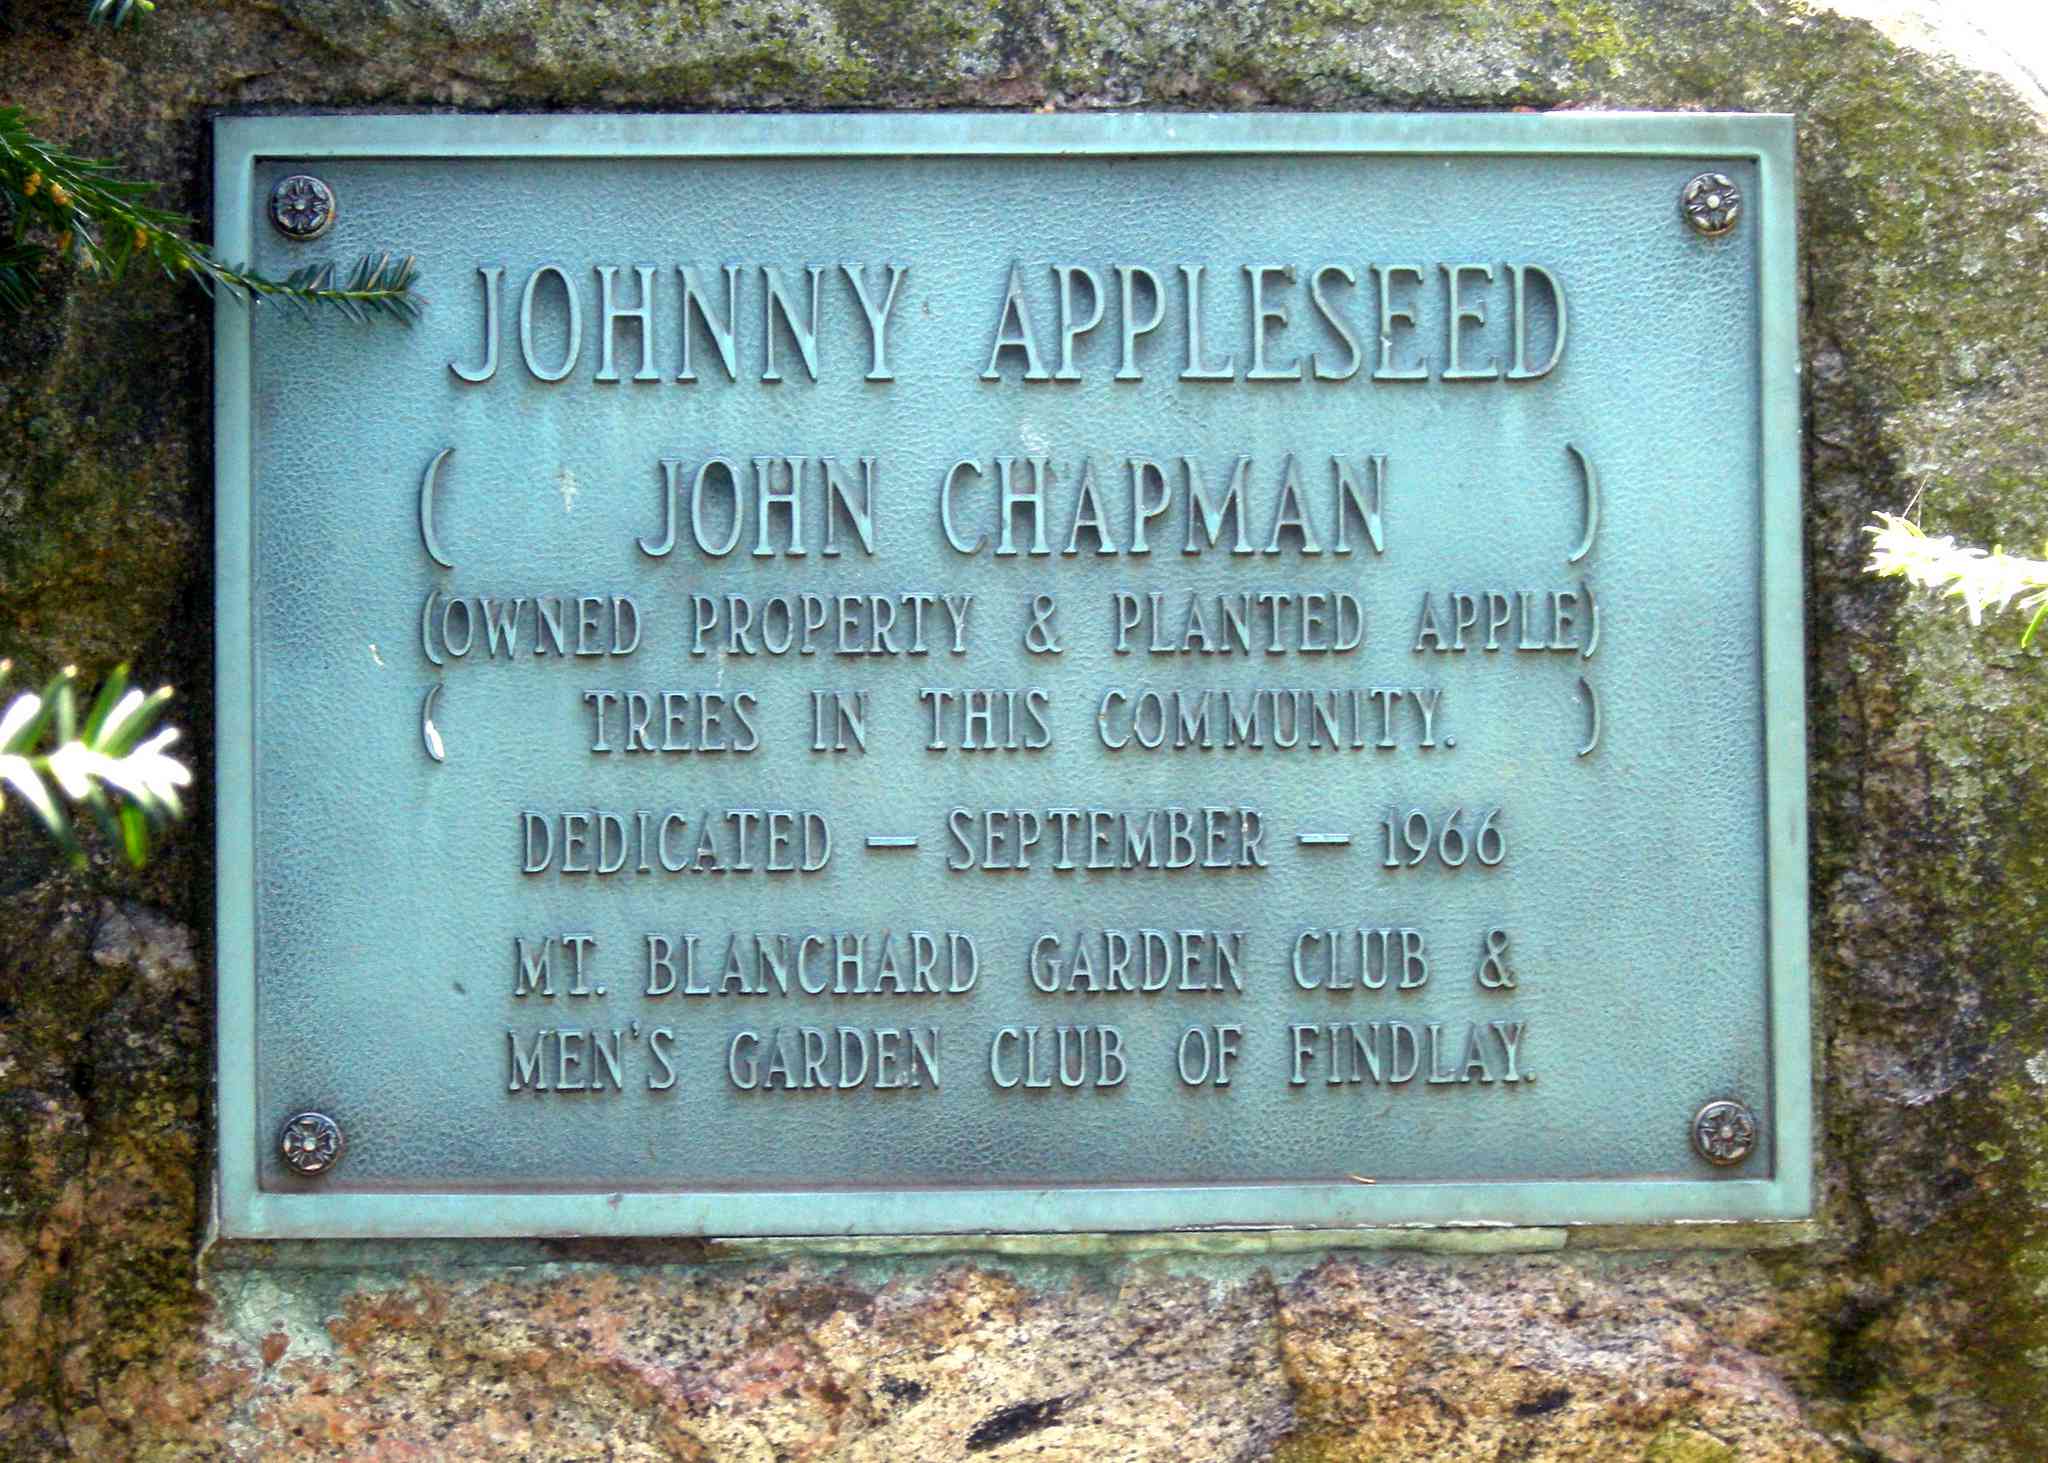 Johnny Appleseed牌匾